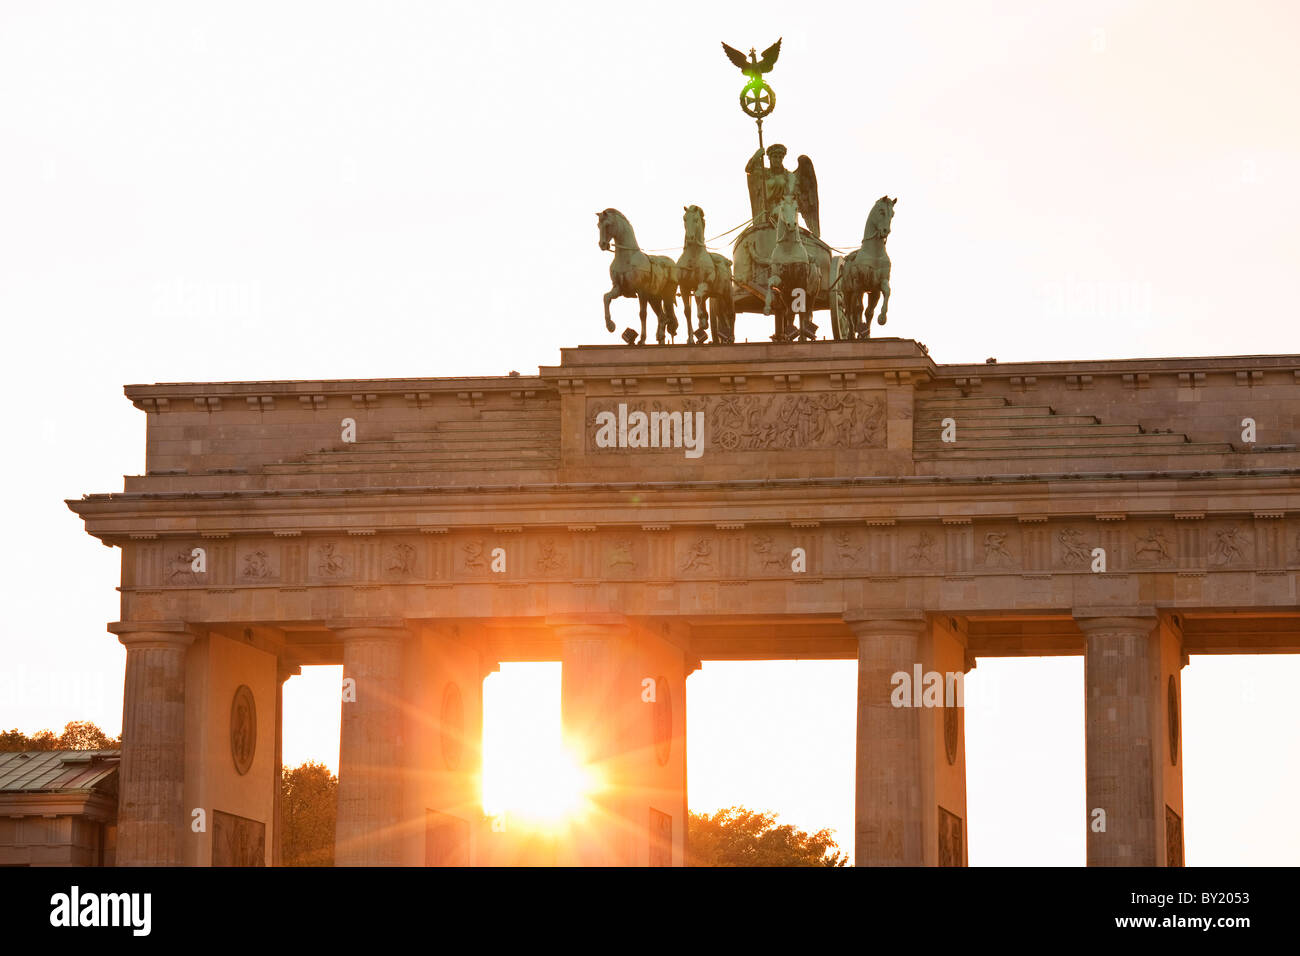 Germany,Berlin, the Brandenburg Gate at sunset Stock Photo